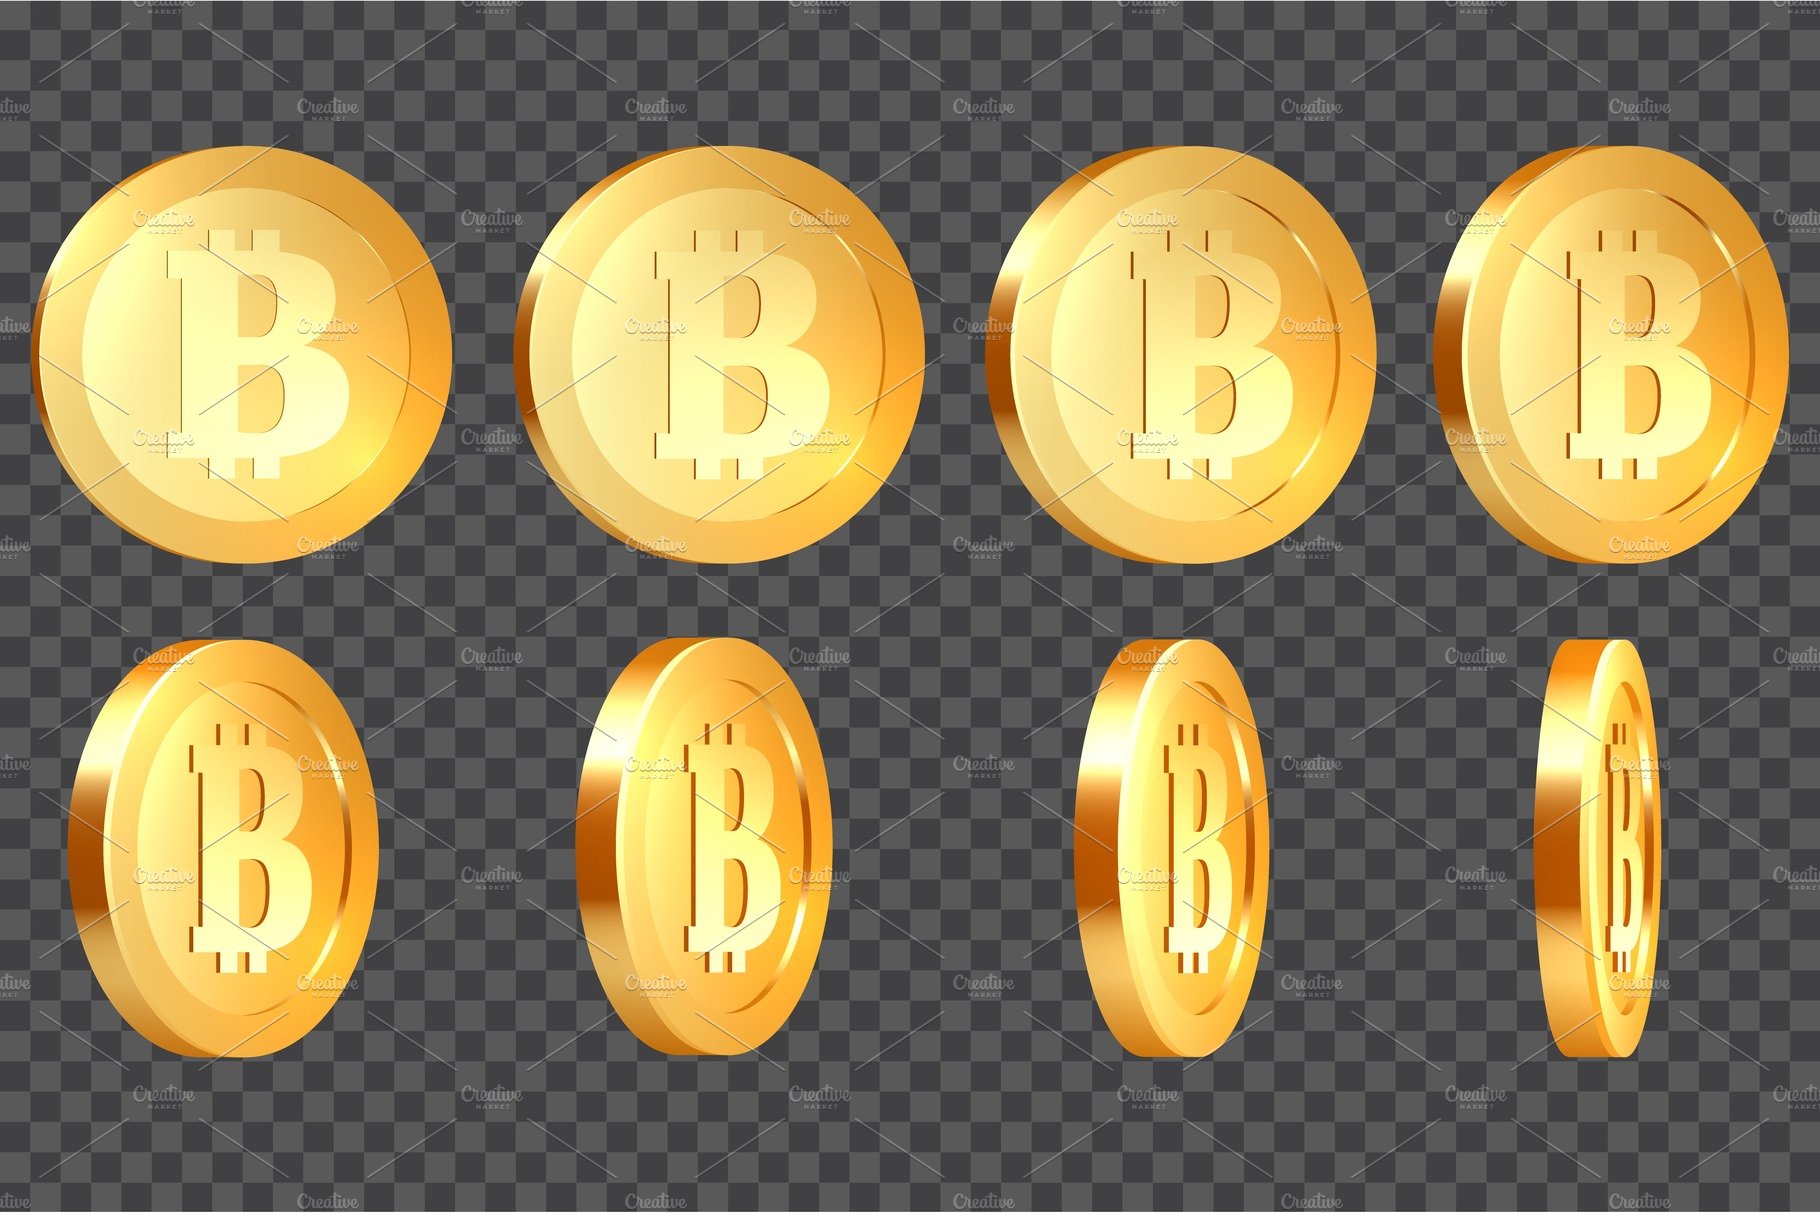 A set of golden bitcoins on a transparent background.